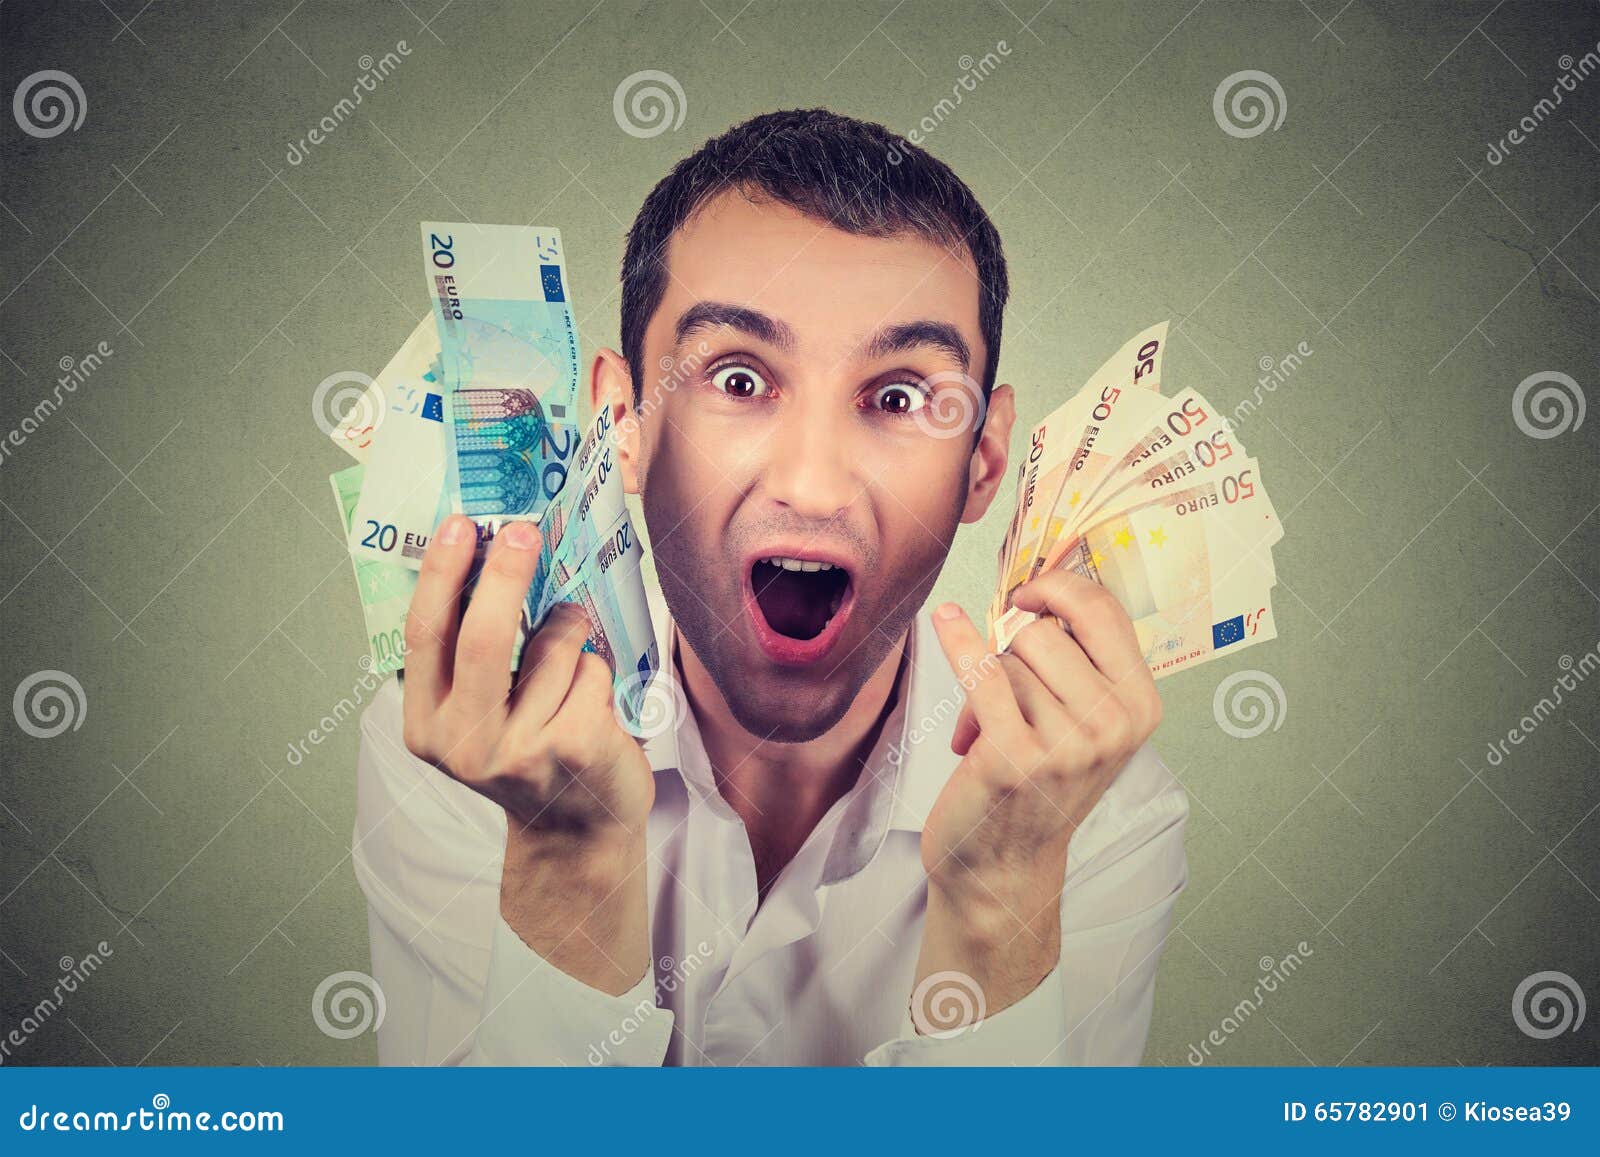 happy man with money euro banknotes ecstatic celebrates success